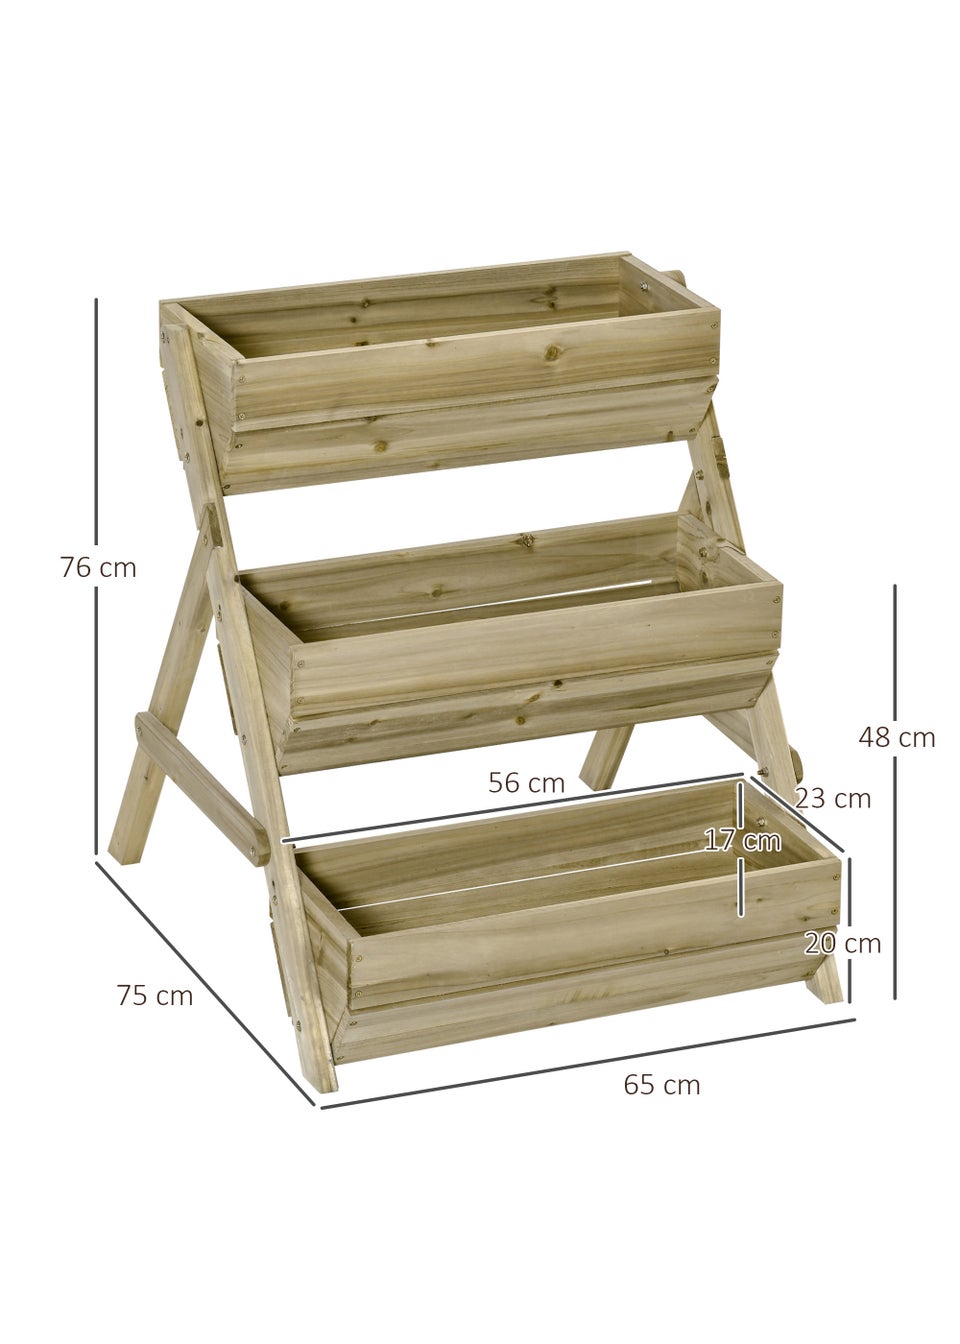 Outsunny 3 Tier Raised Garden Bed Box (65cm x 75cm x 76cm)